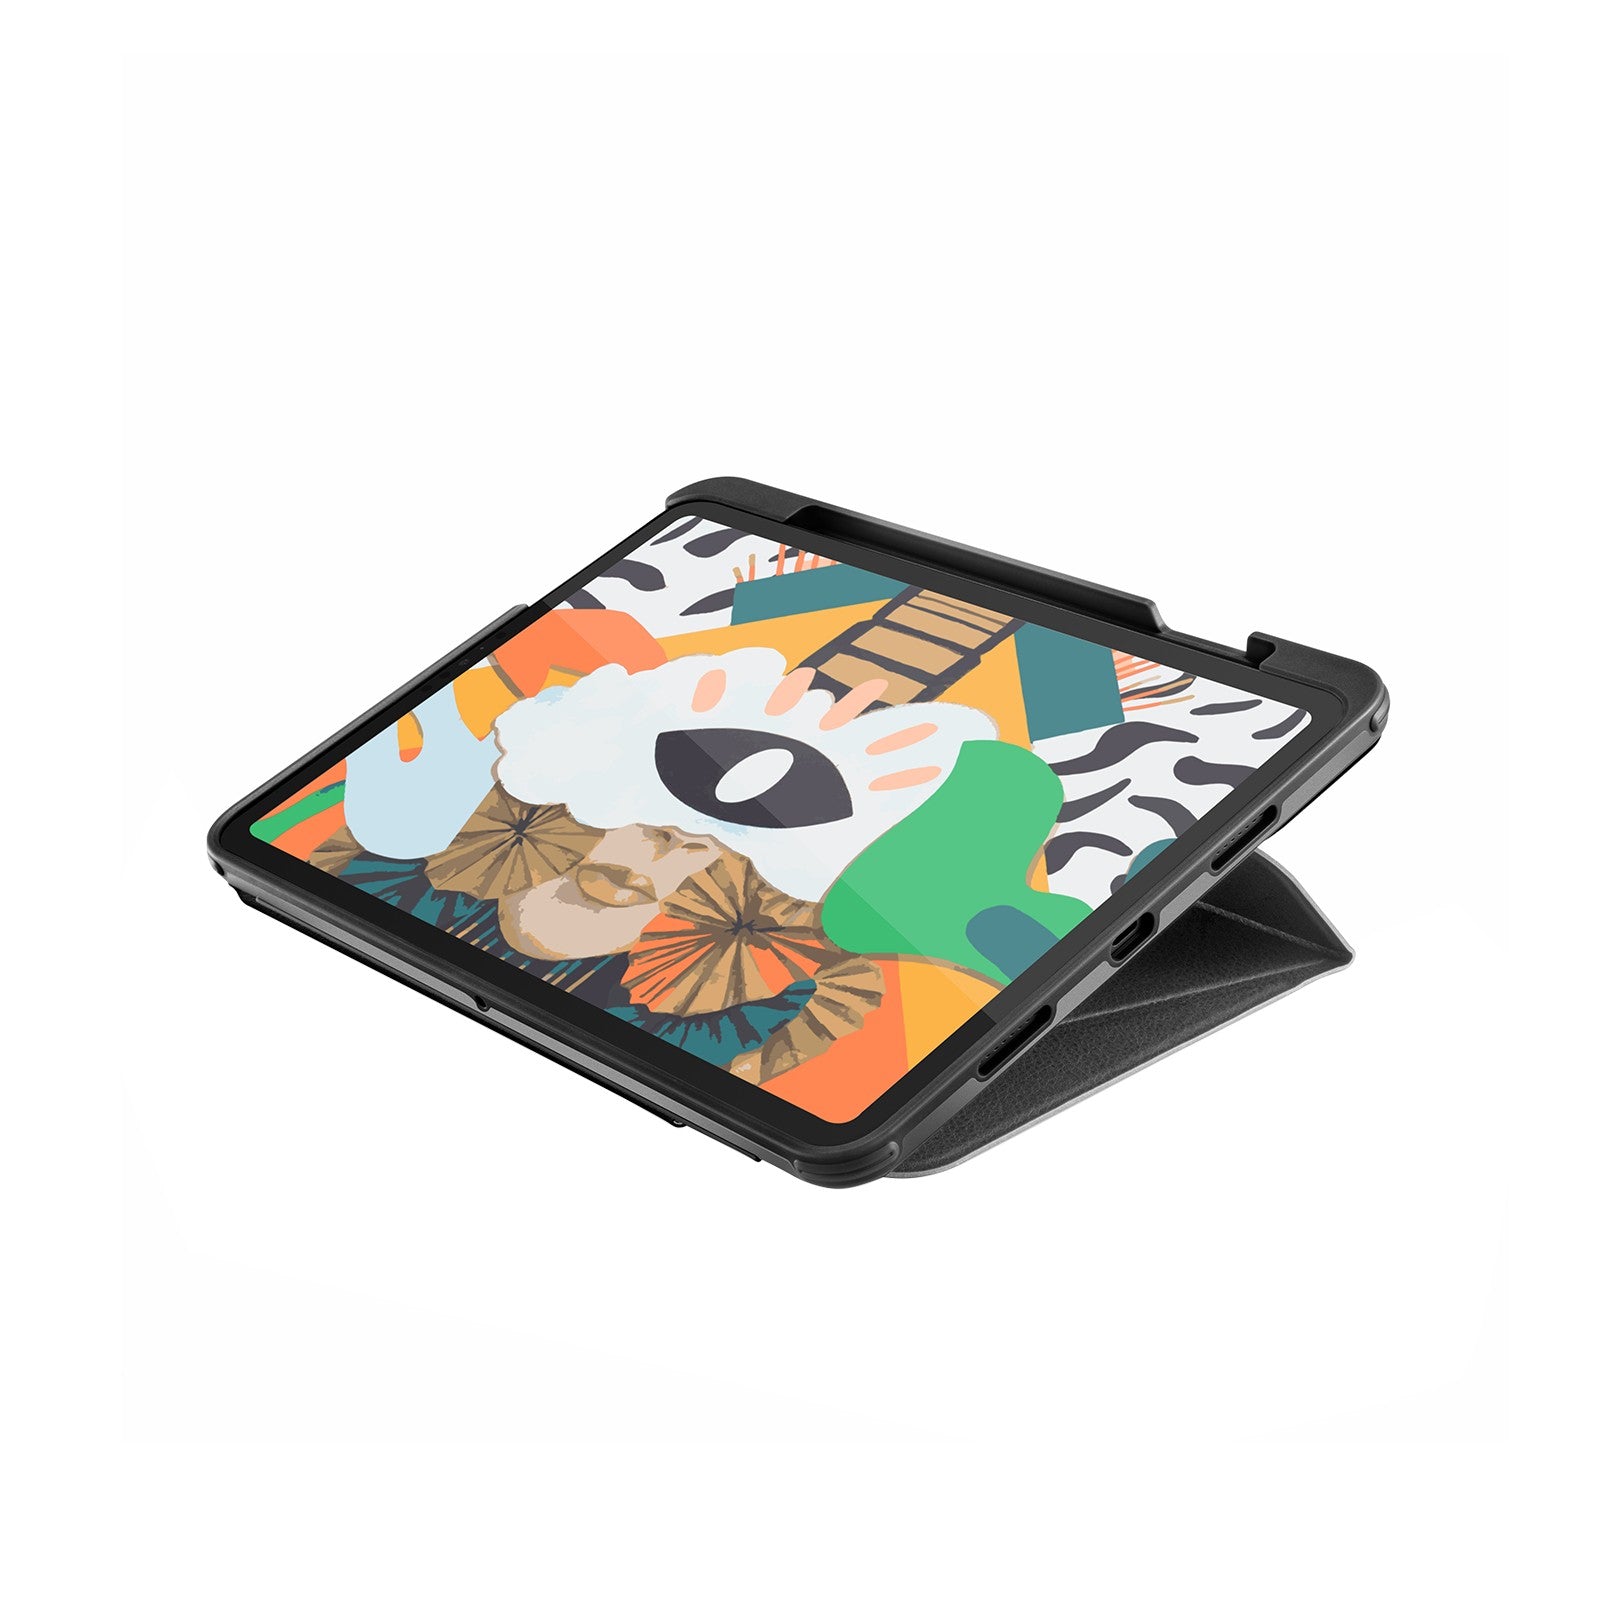 Inspire-B51 iPad Tri-Mode Case for 2021 iPad Pro 11-inch